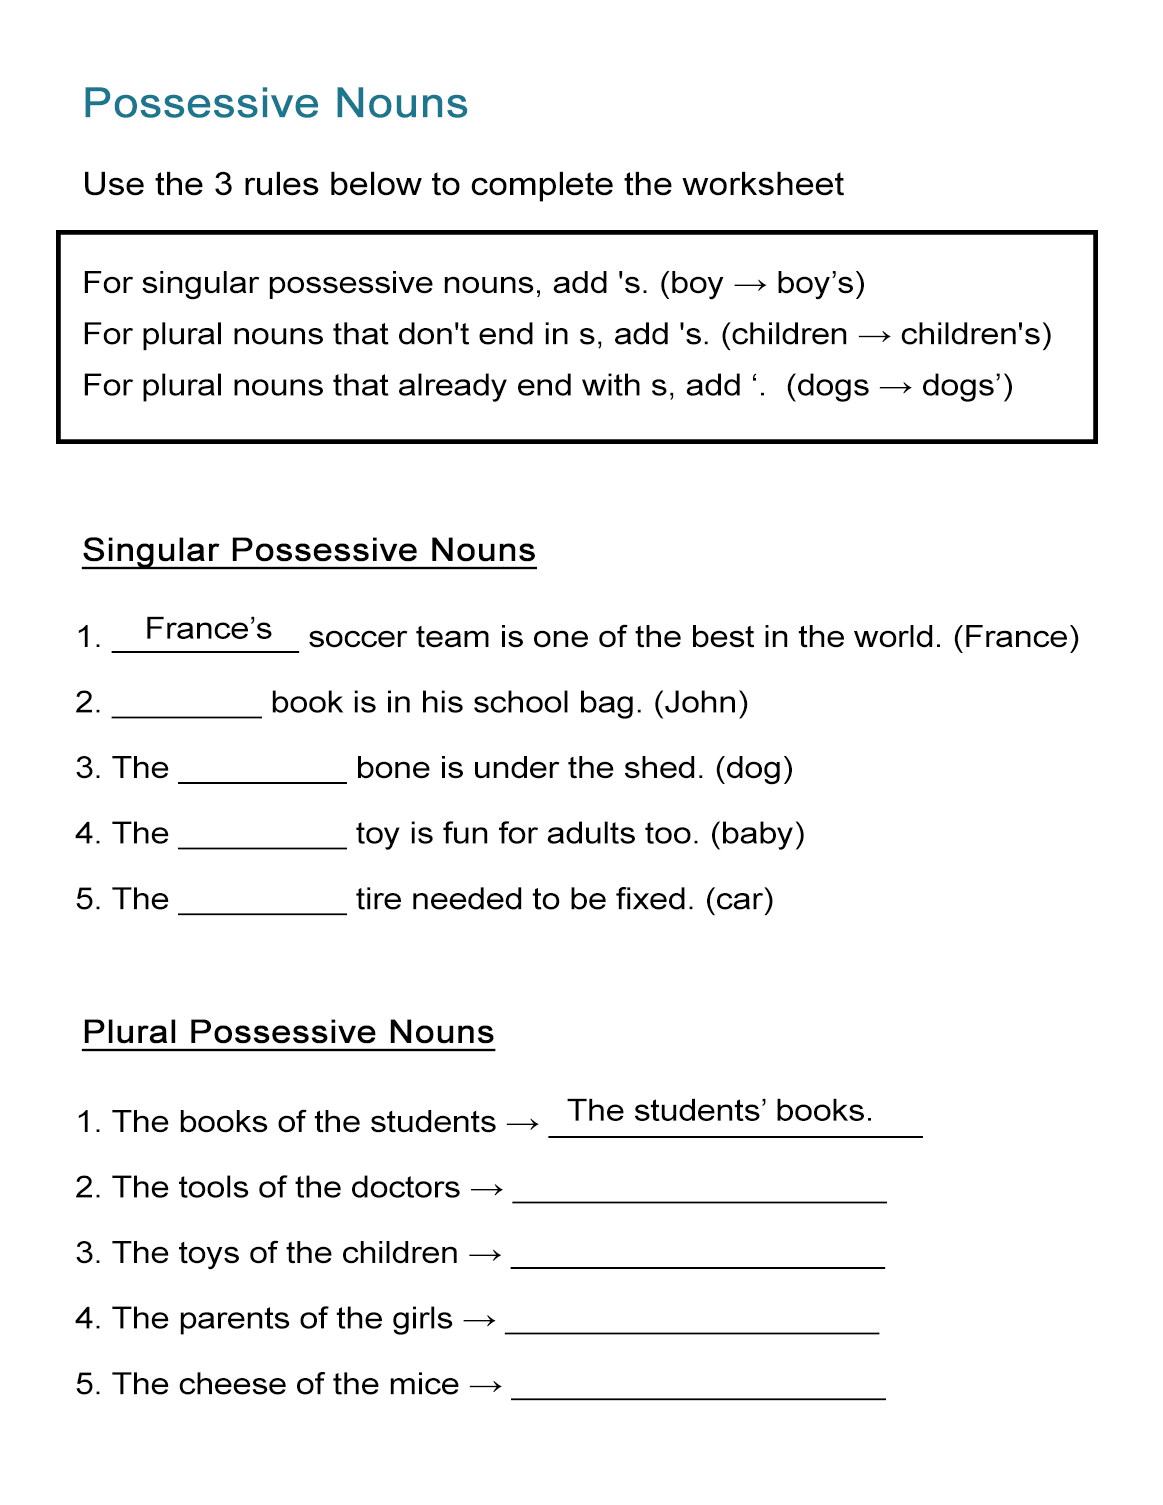 Possessive Nouns Worksheet: Singular and Plural Nouns - ALL ESL Within Singular Possessive Nouns Worksheet